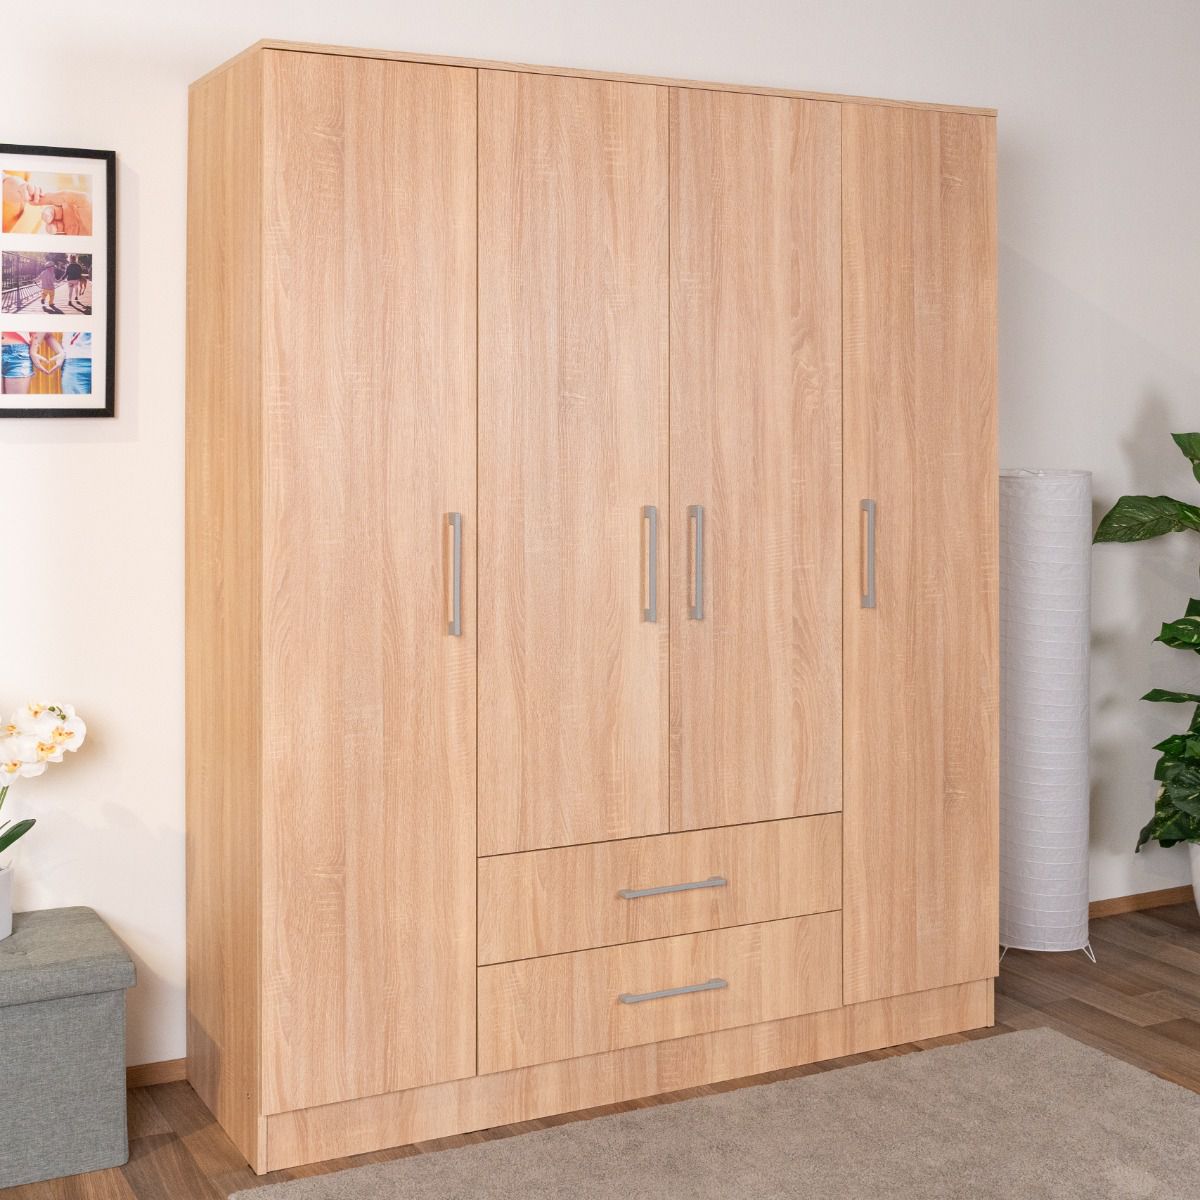 Hinged door wardrobe / closet Sidonia 06, color: oak brown - 200 x 164 x 53 cm (H x W x D)